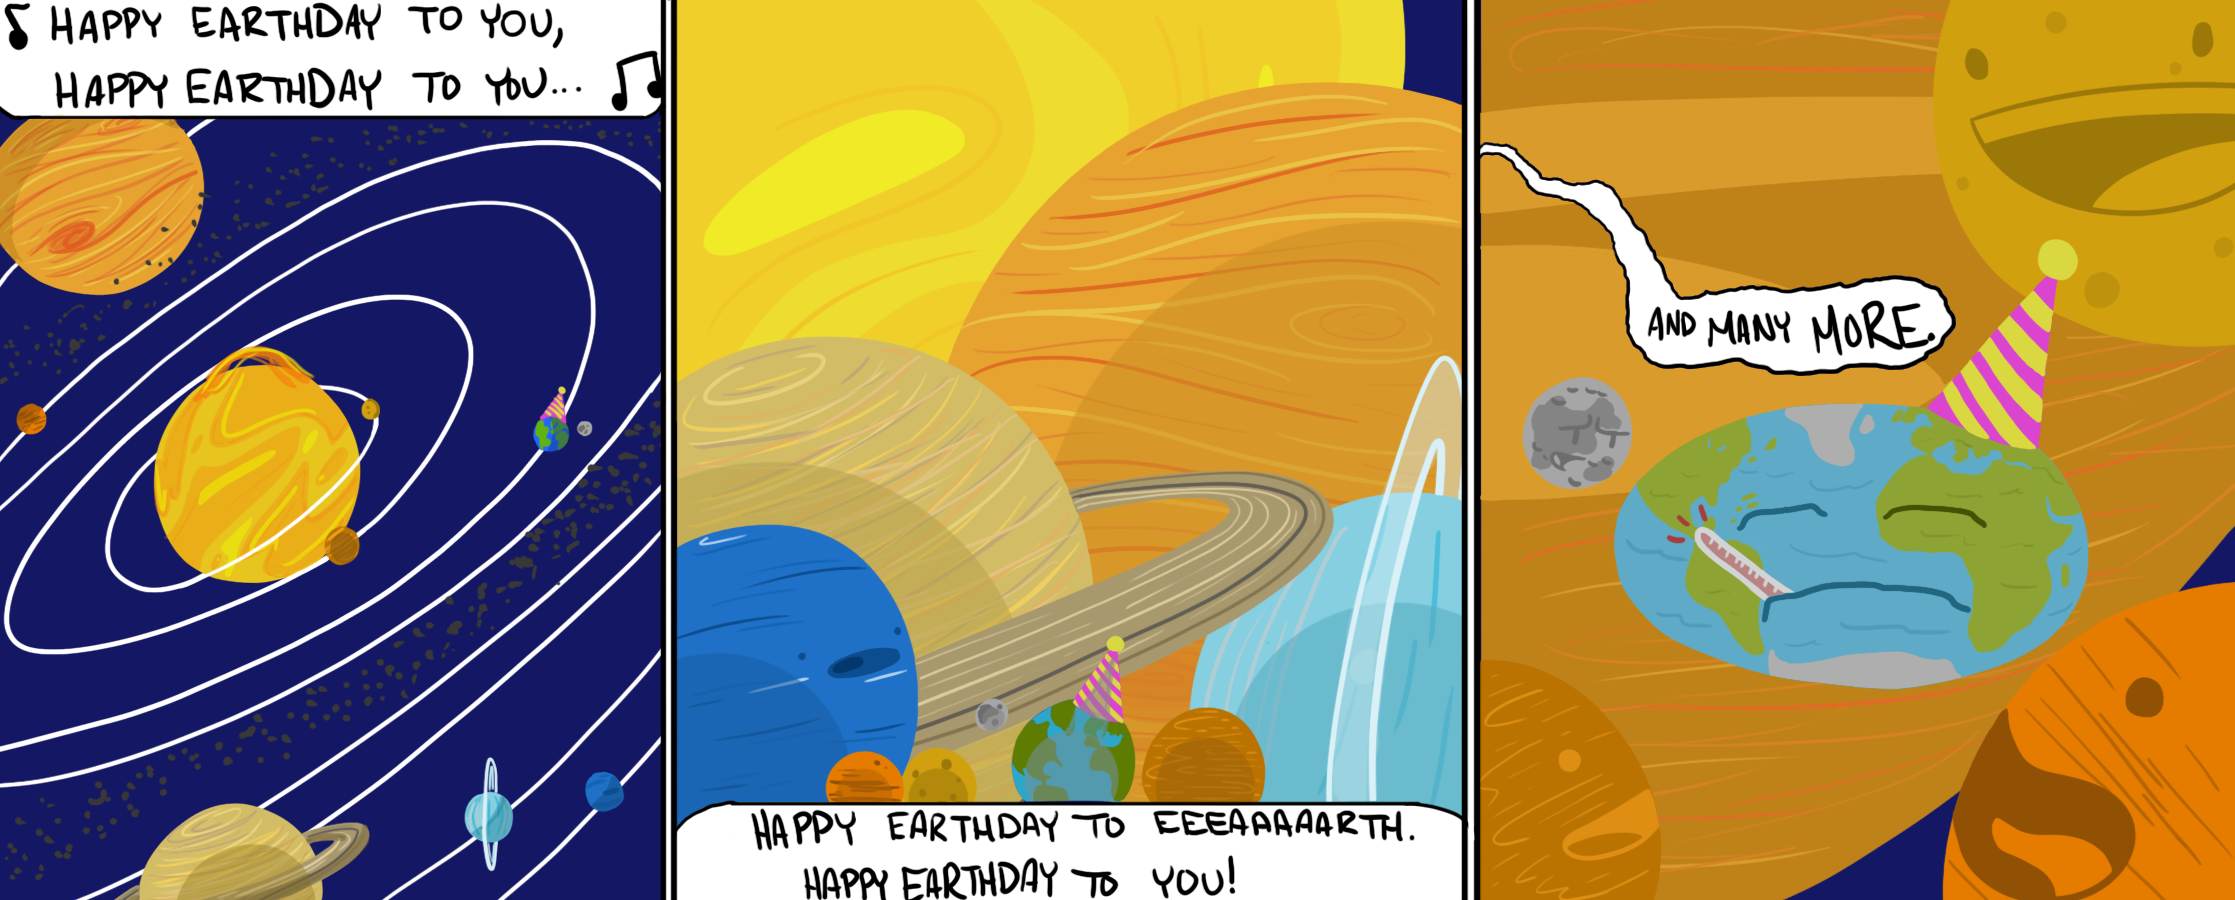 Earthday birthday